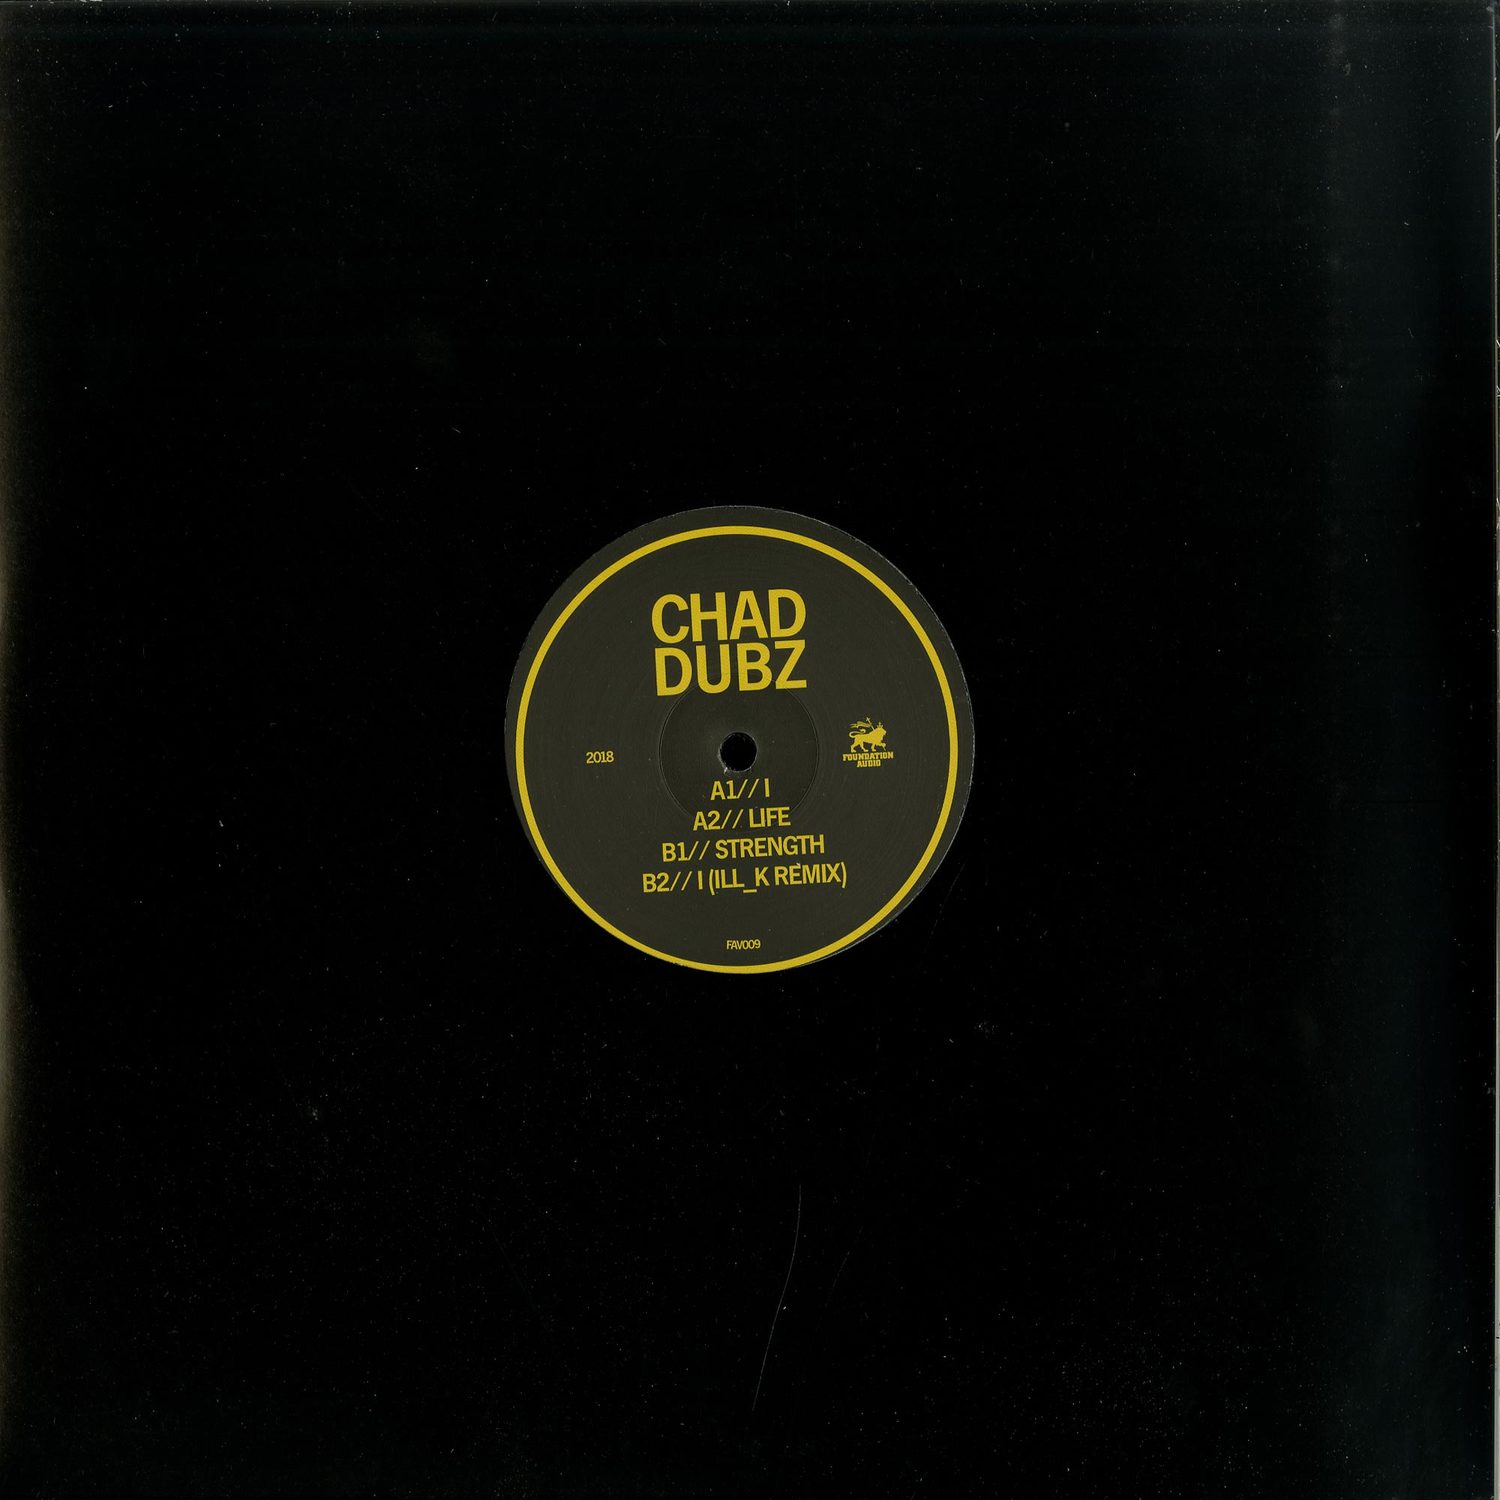 Chad Dubz - I EP